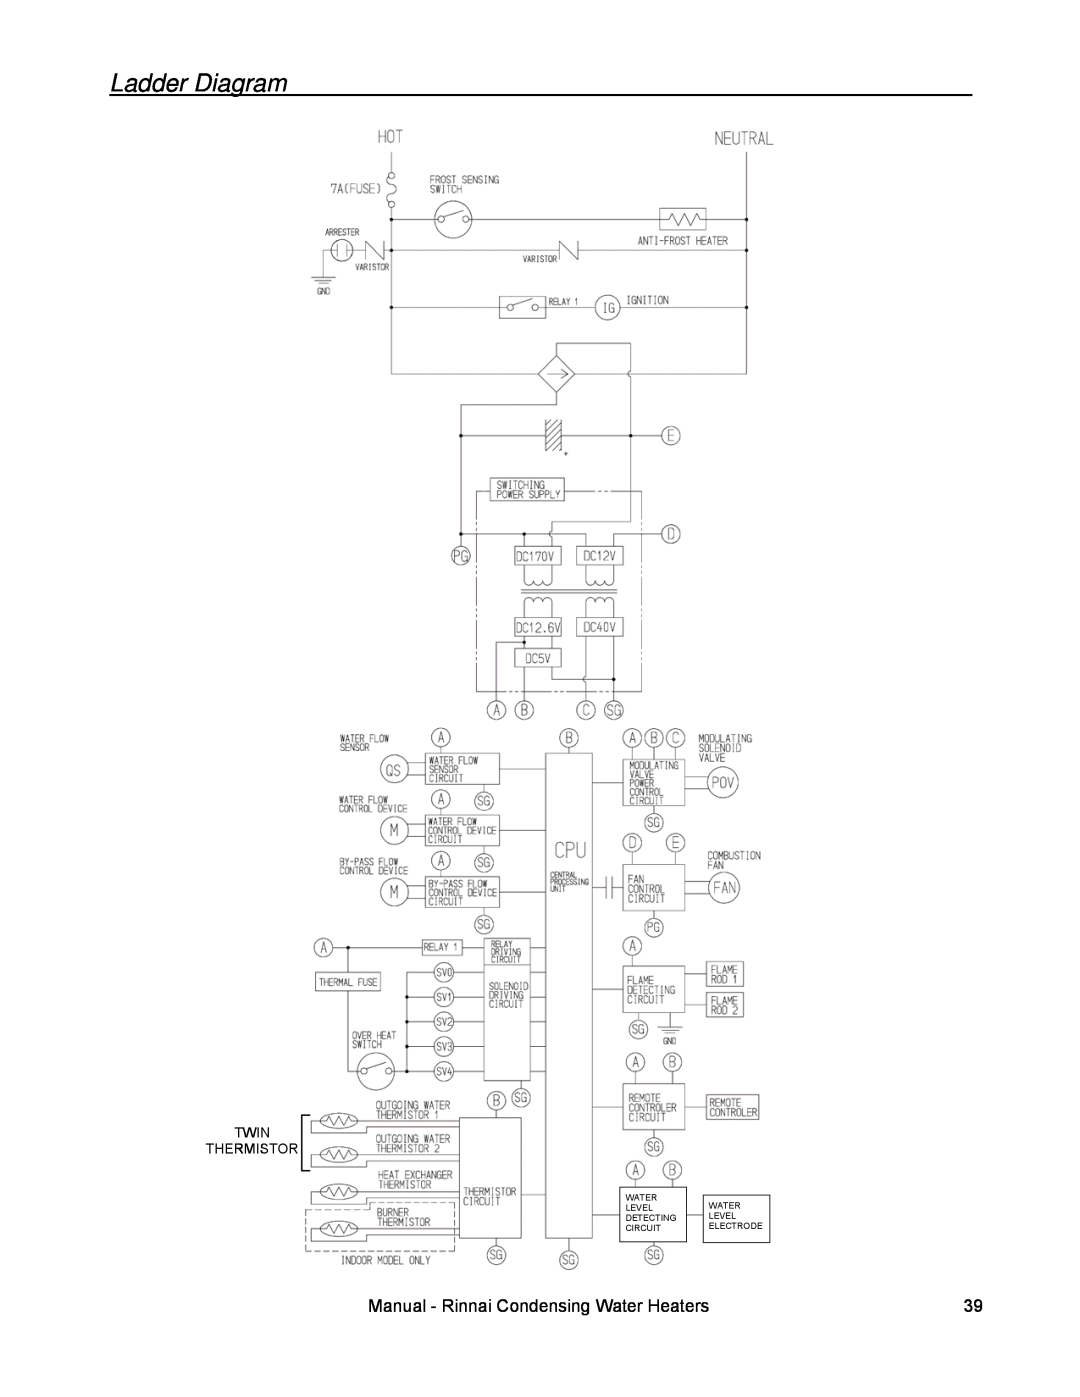 Rinnai RC80E, RC98I, RC98E, RC80I installation manual Ladder Diagram, Twin Thermistor 